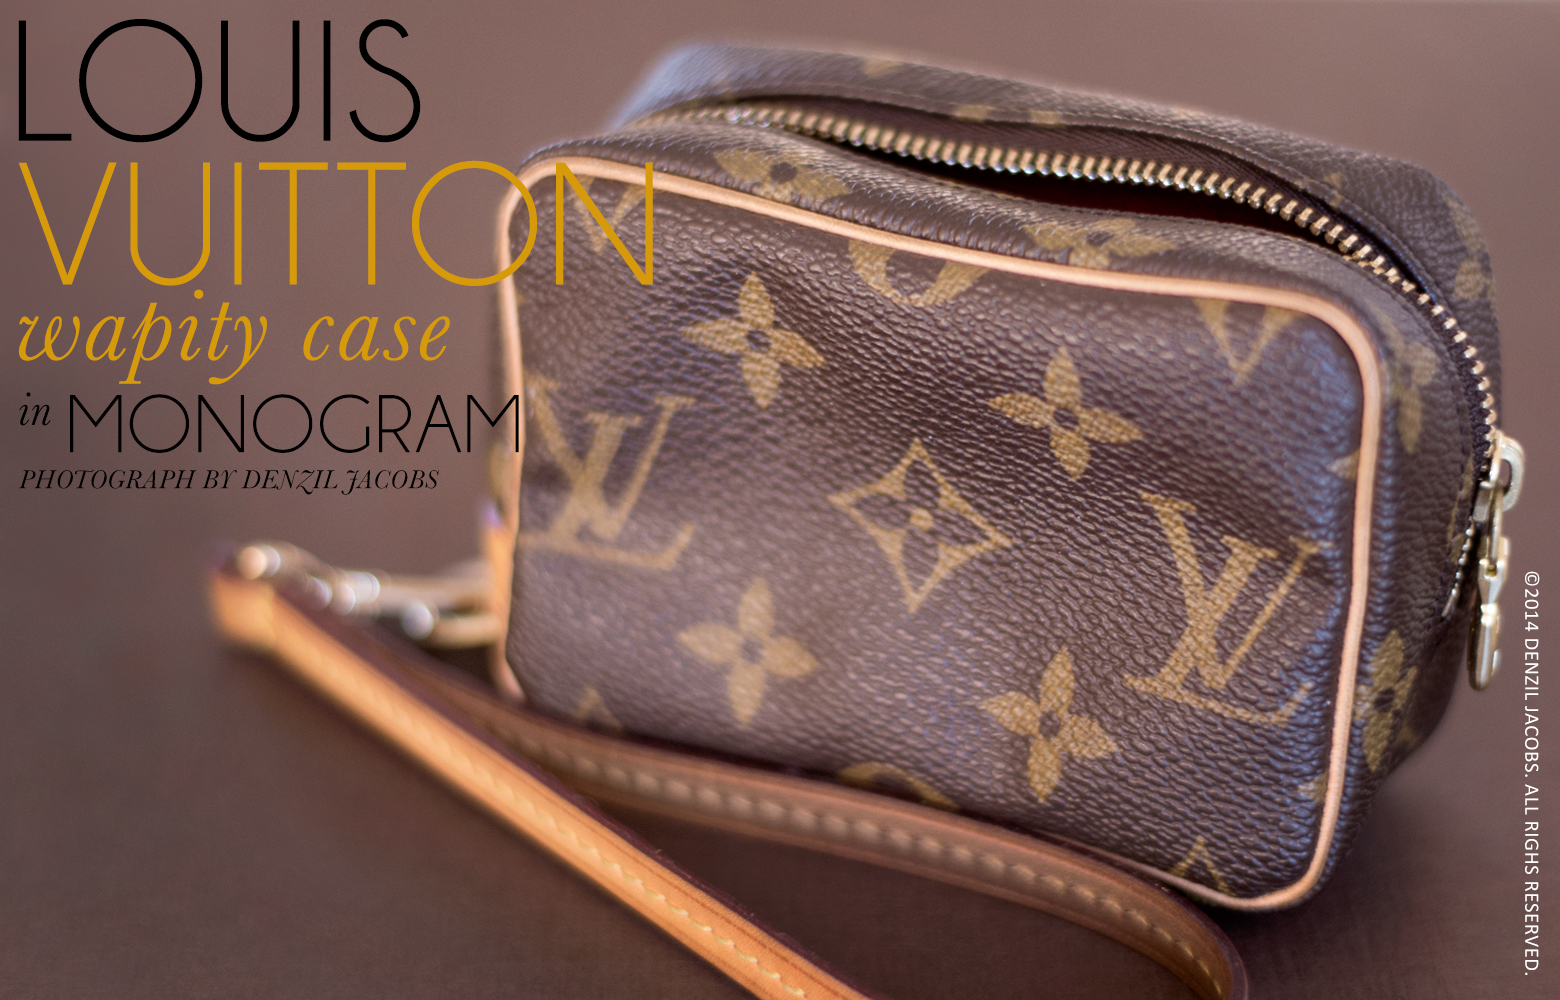 Louis Vuitton Monogram Wapity Case